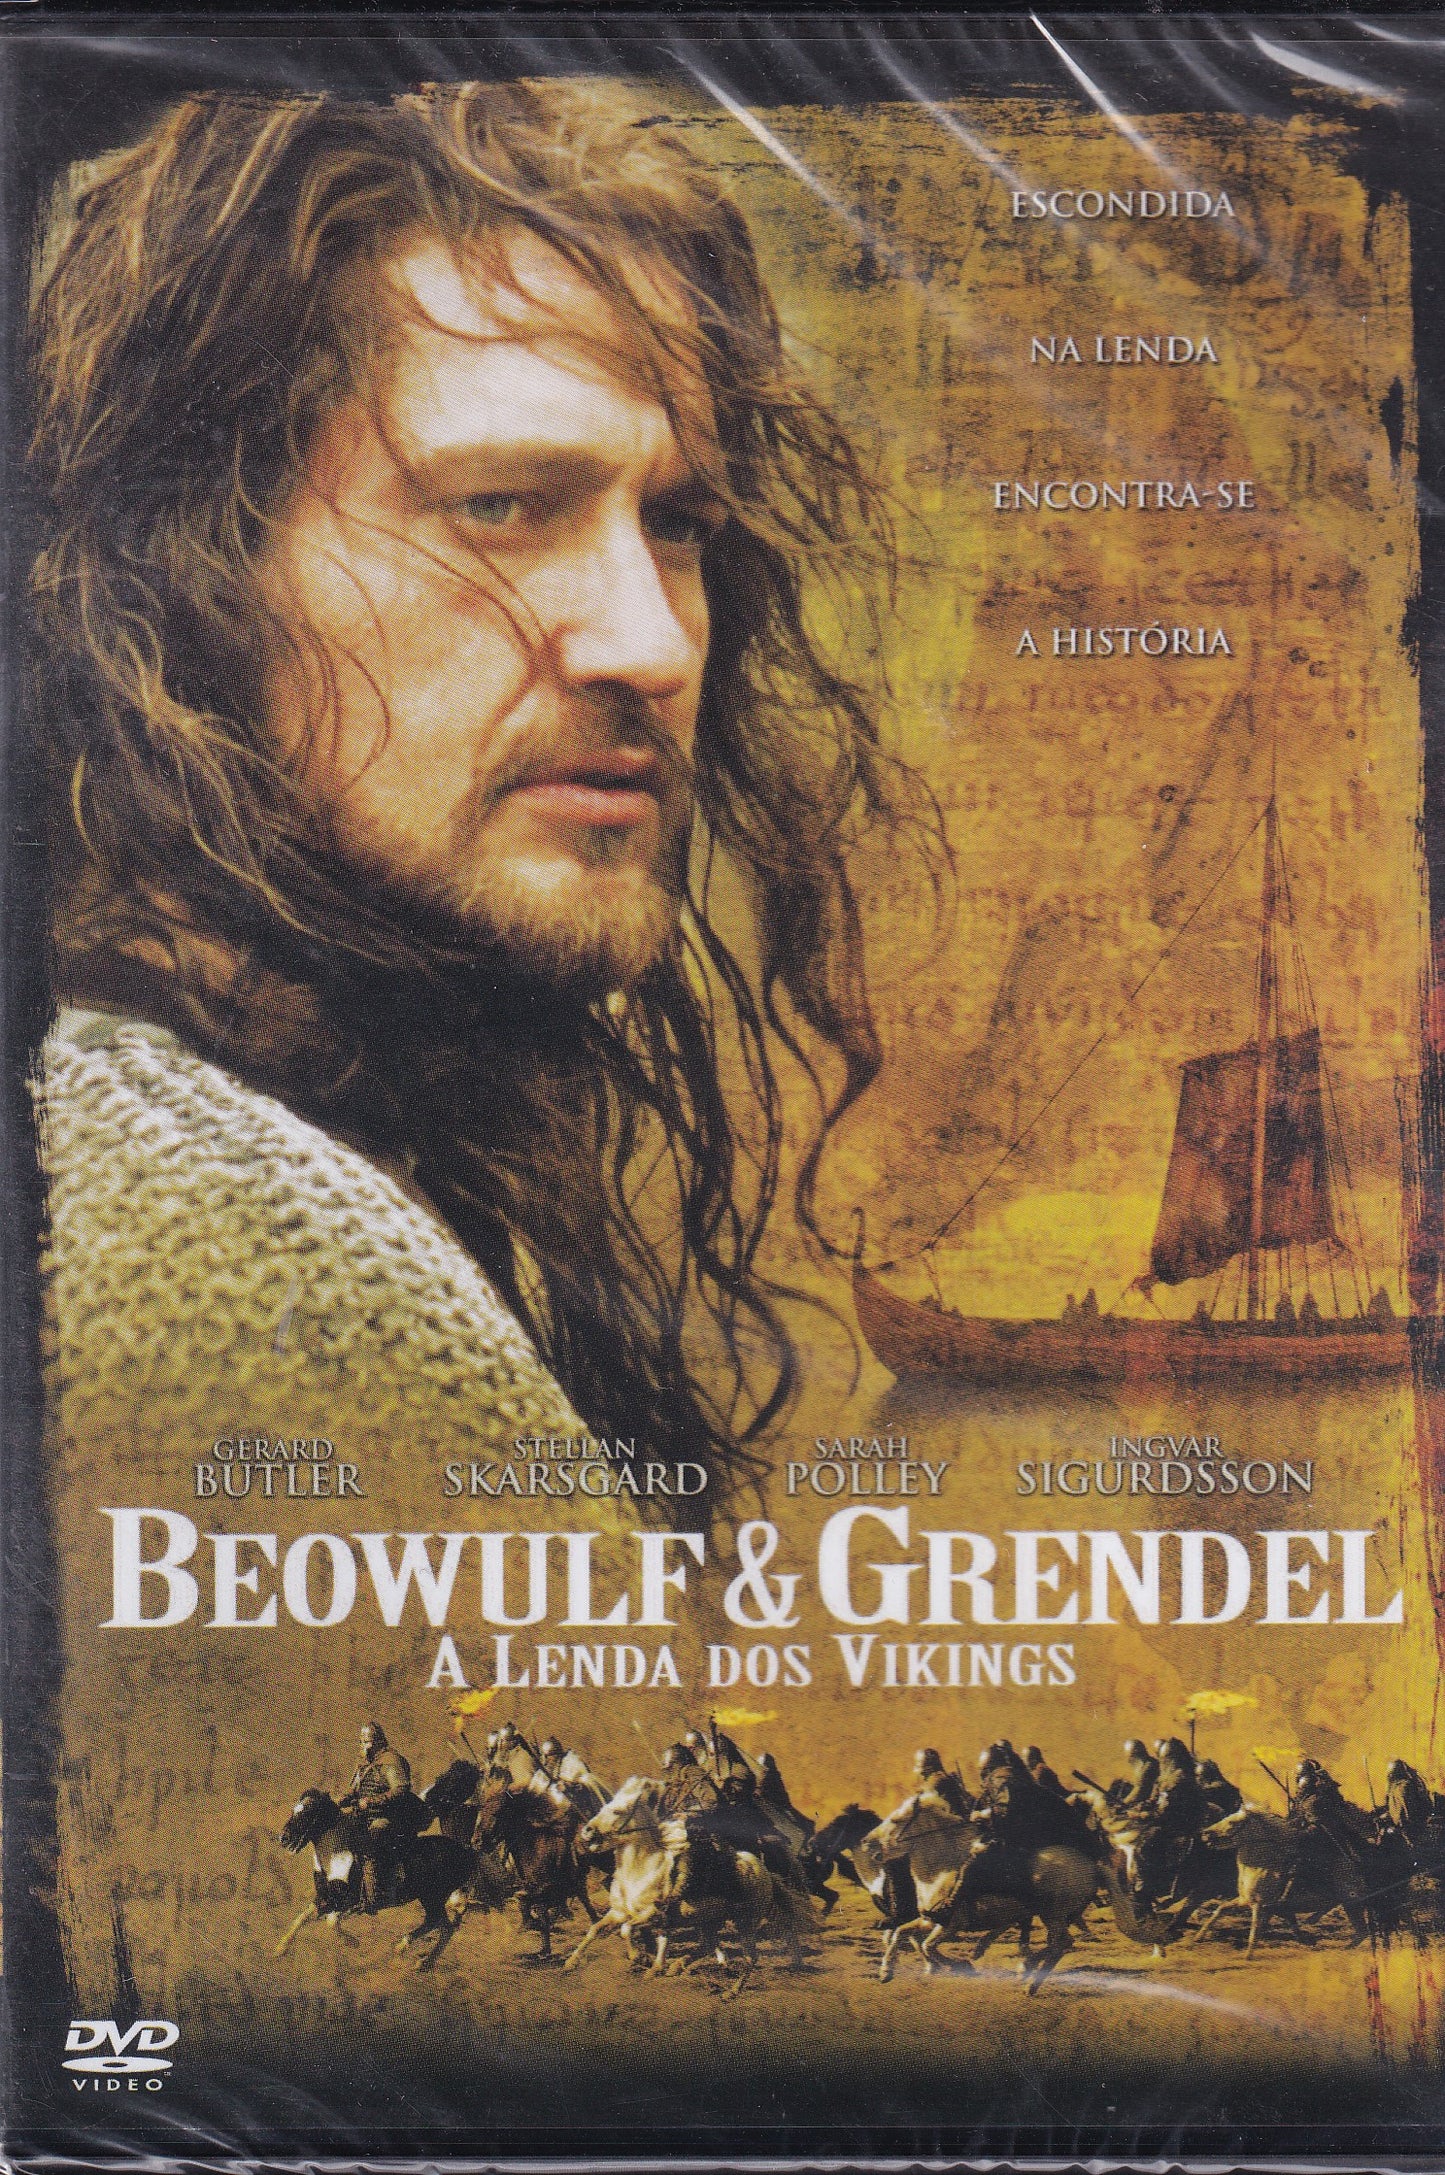 DVD BEWULF & GRENDEL: A LENDA DOS VIKINGS - NOVO